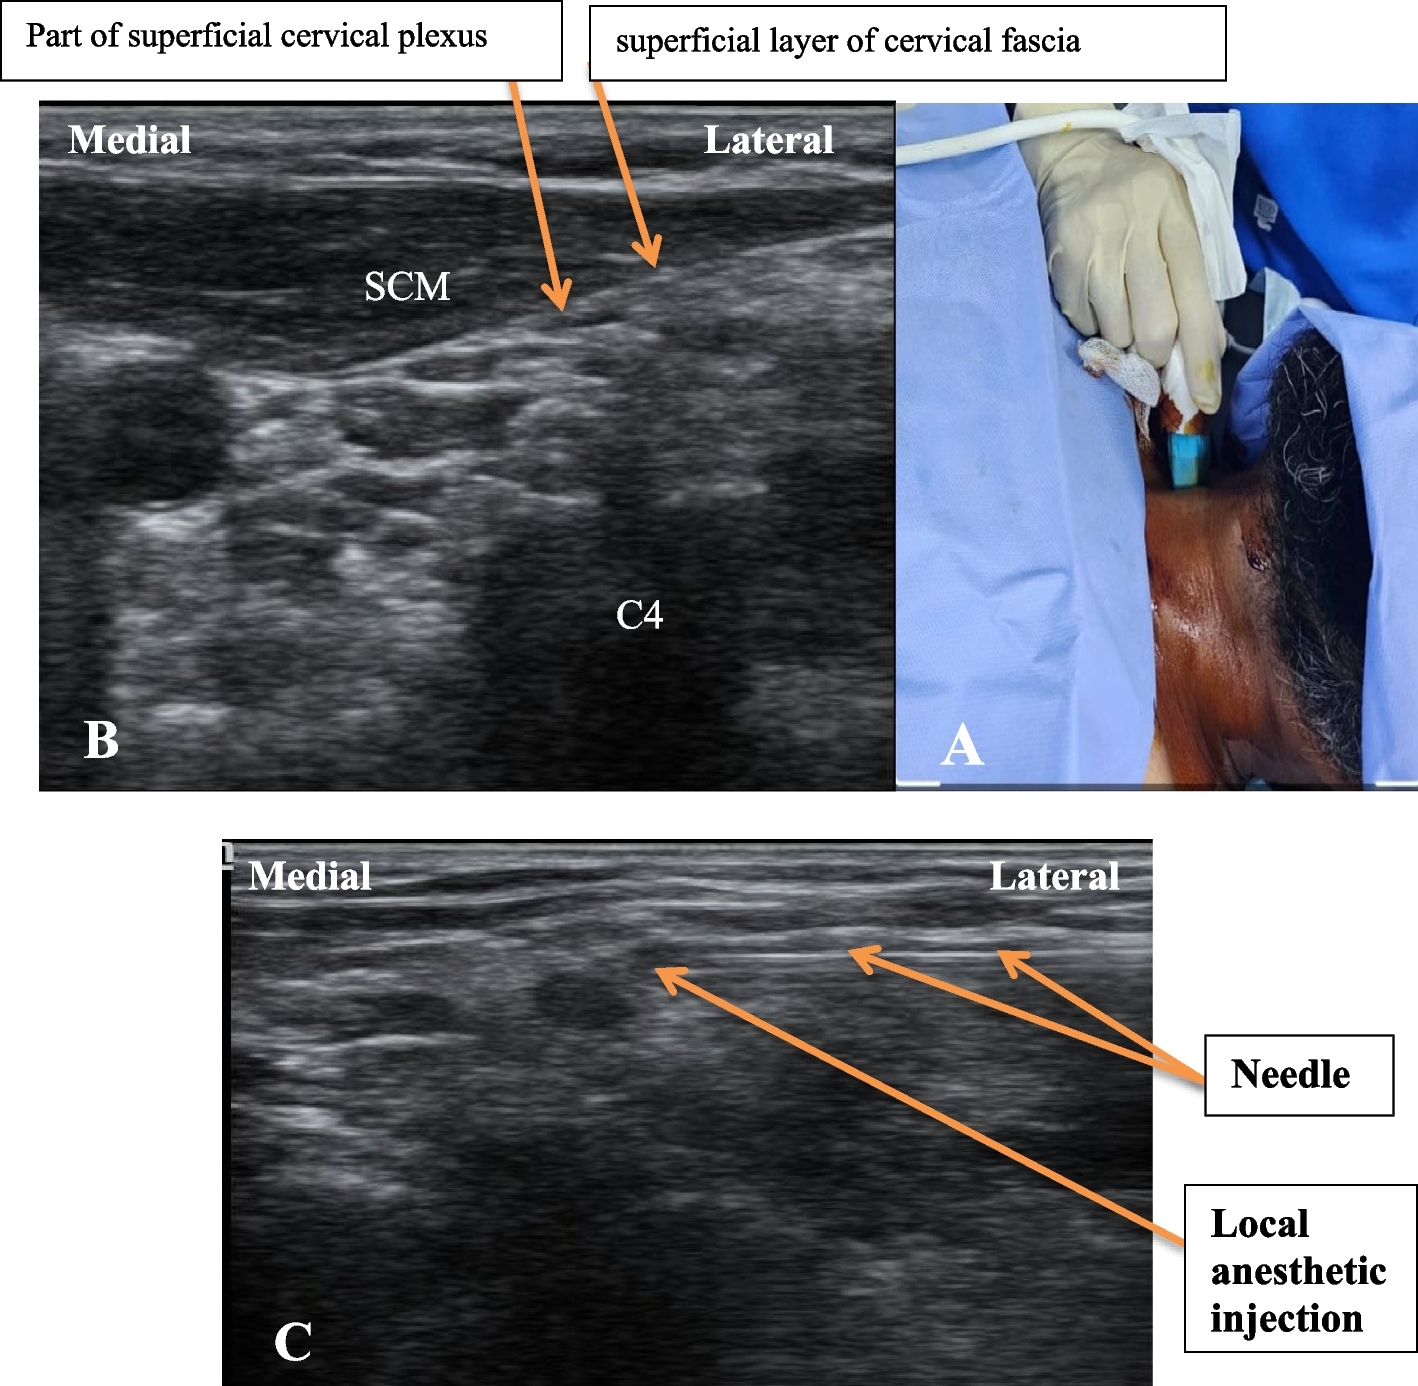 Regional analgesia using ultrasound-guided intermediate cervical plexus block versus cervical erector spinae block for anterior cervical spine surgery: a randomized trial